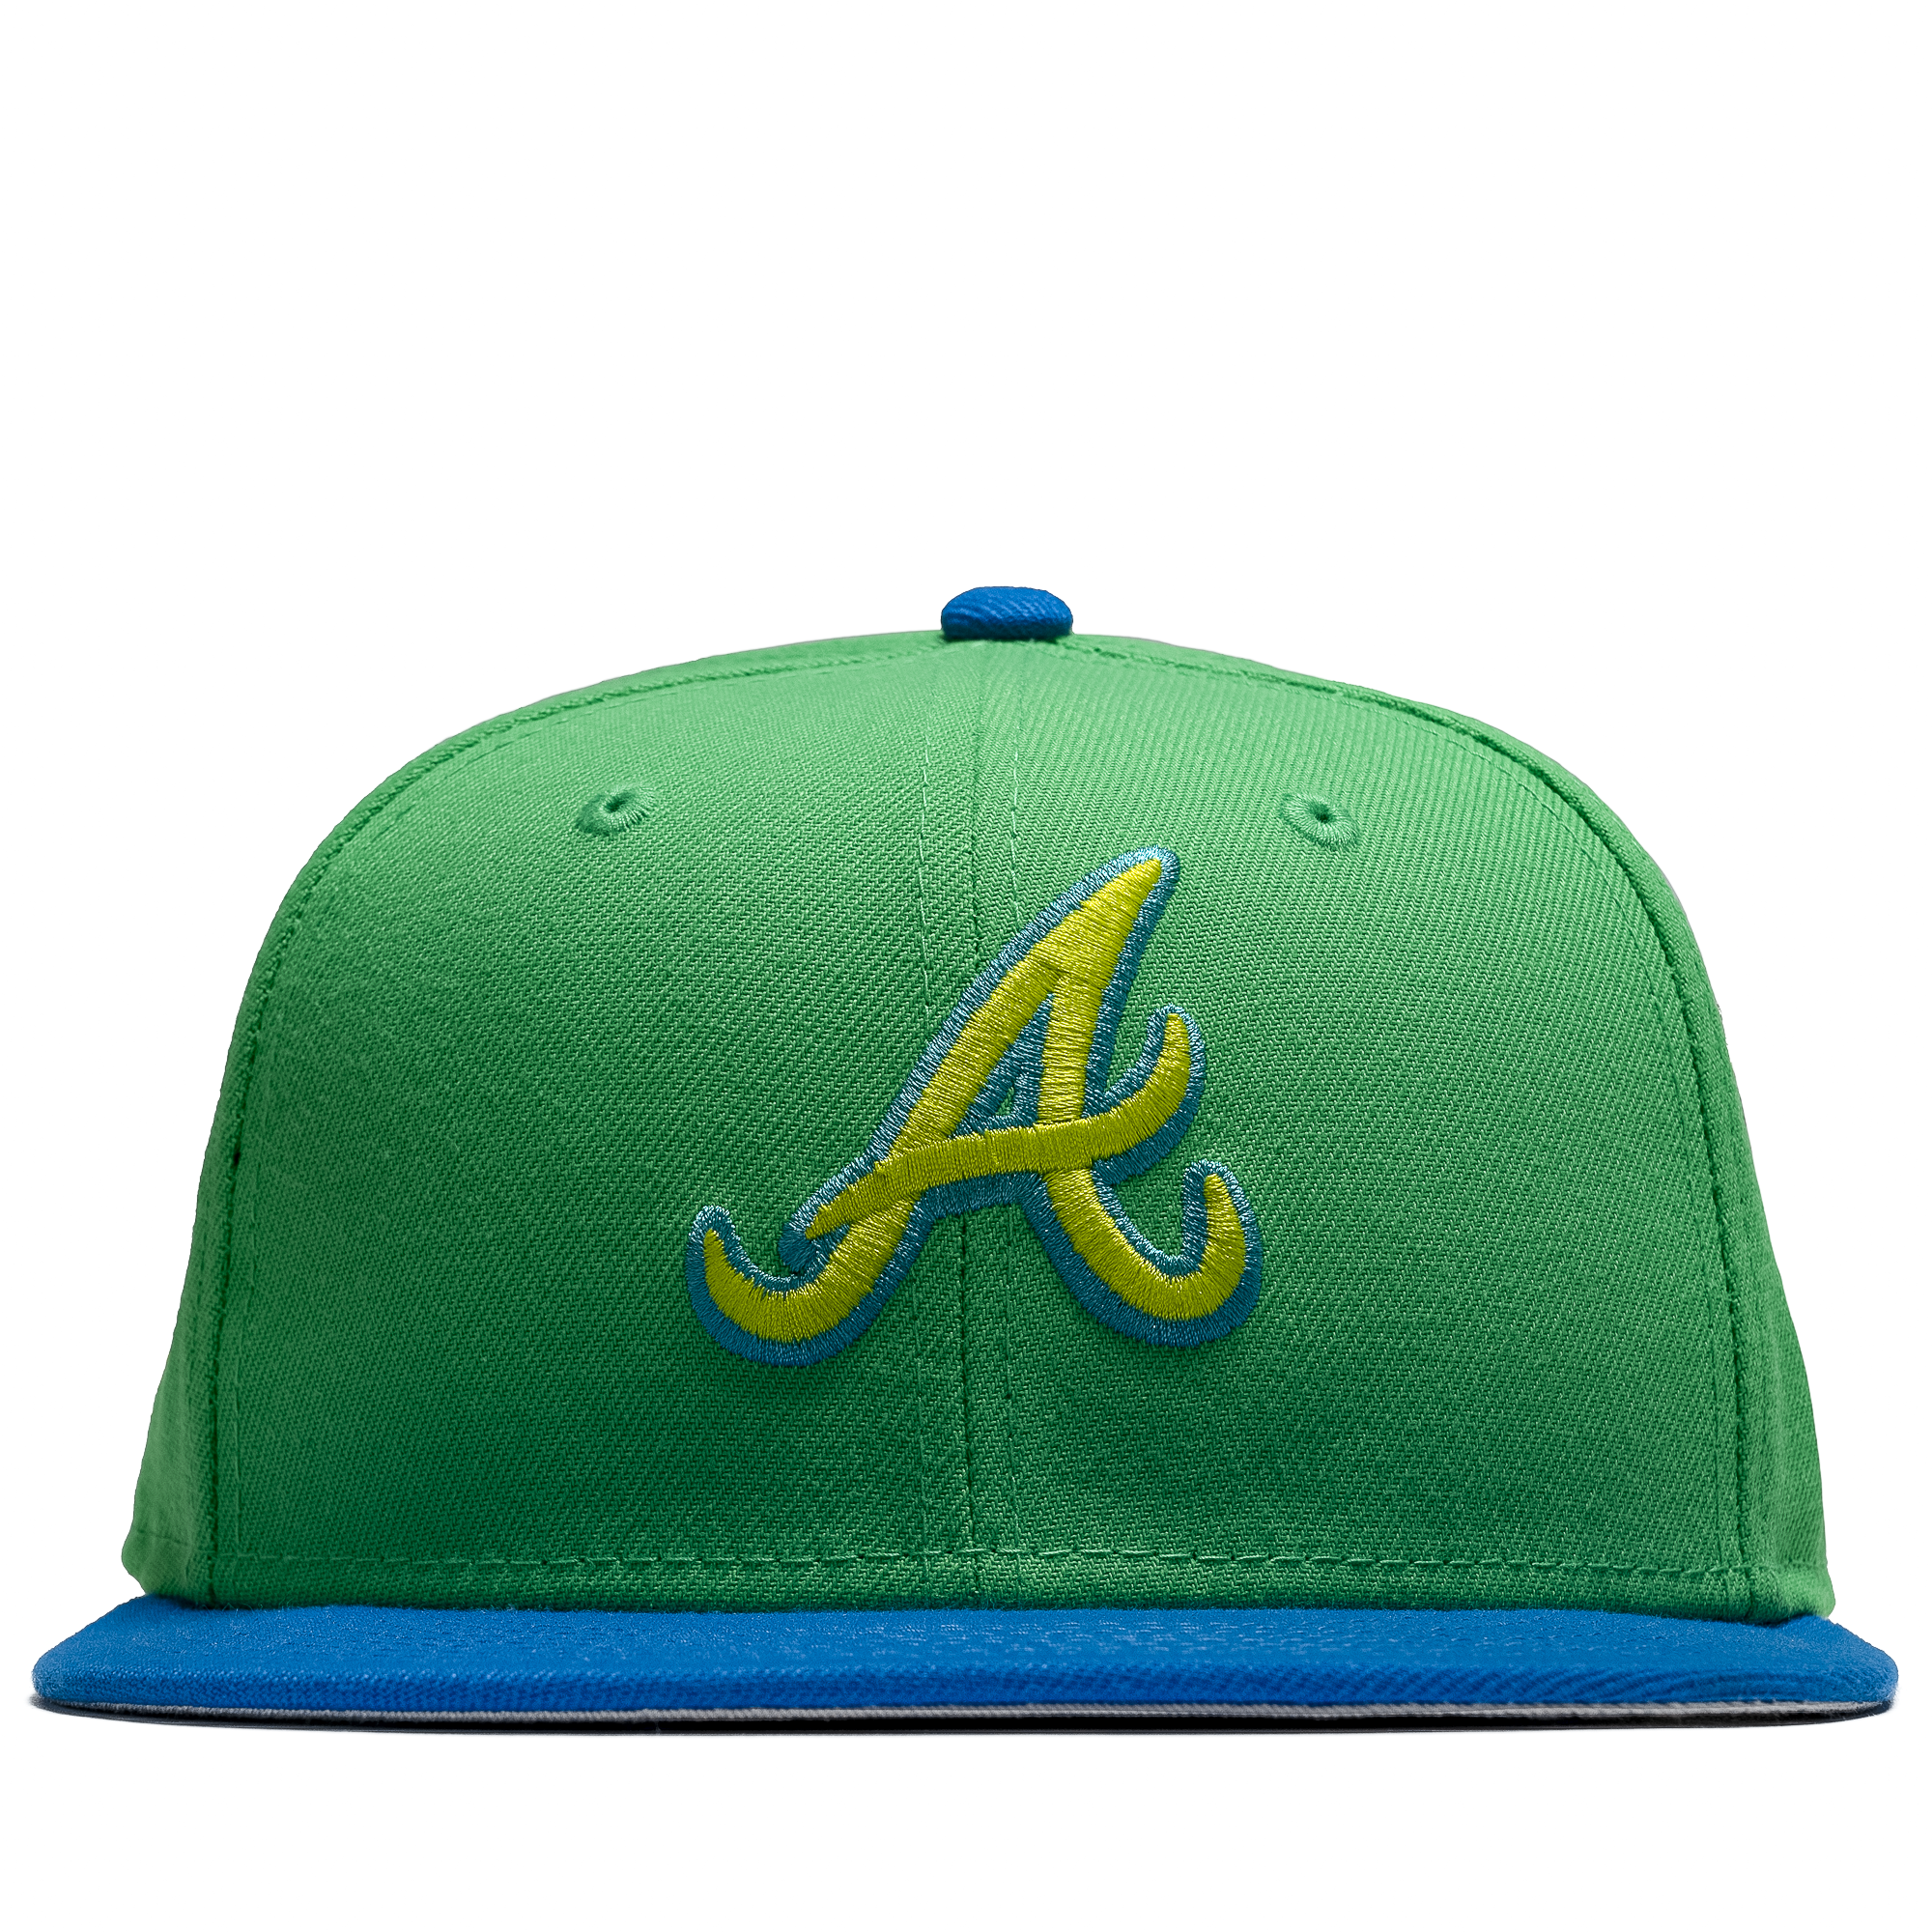 New Era x Politics Atlanta Braves 59FIFTY Fitted Hat - Island Green/Aqua, Size 7 5/8 by Sneaker Politics